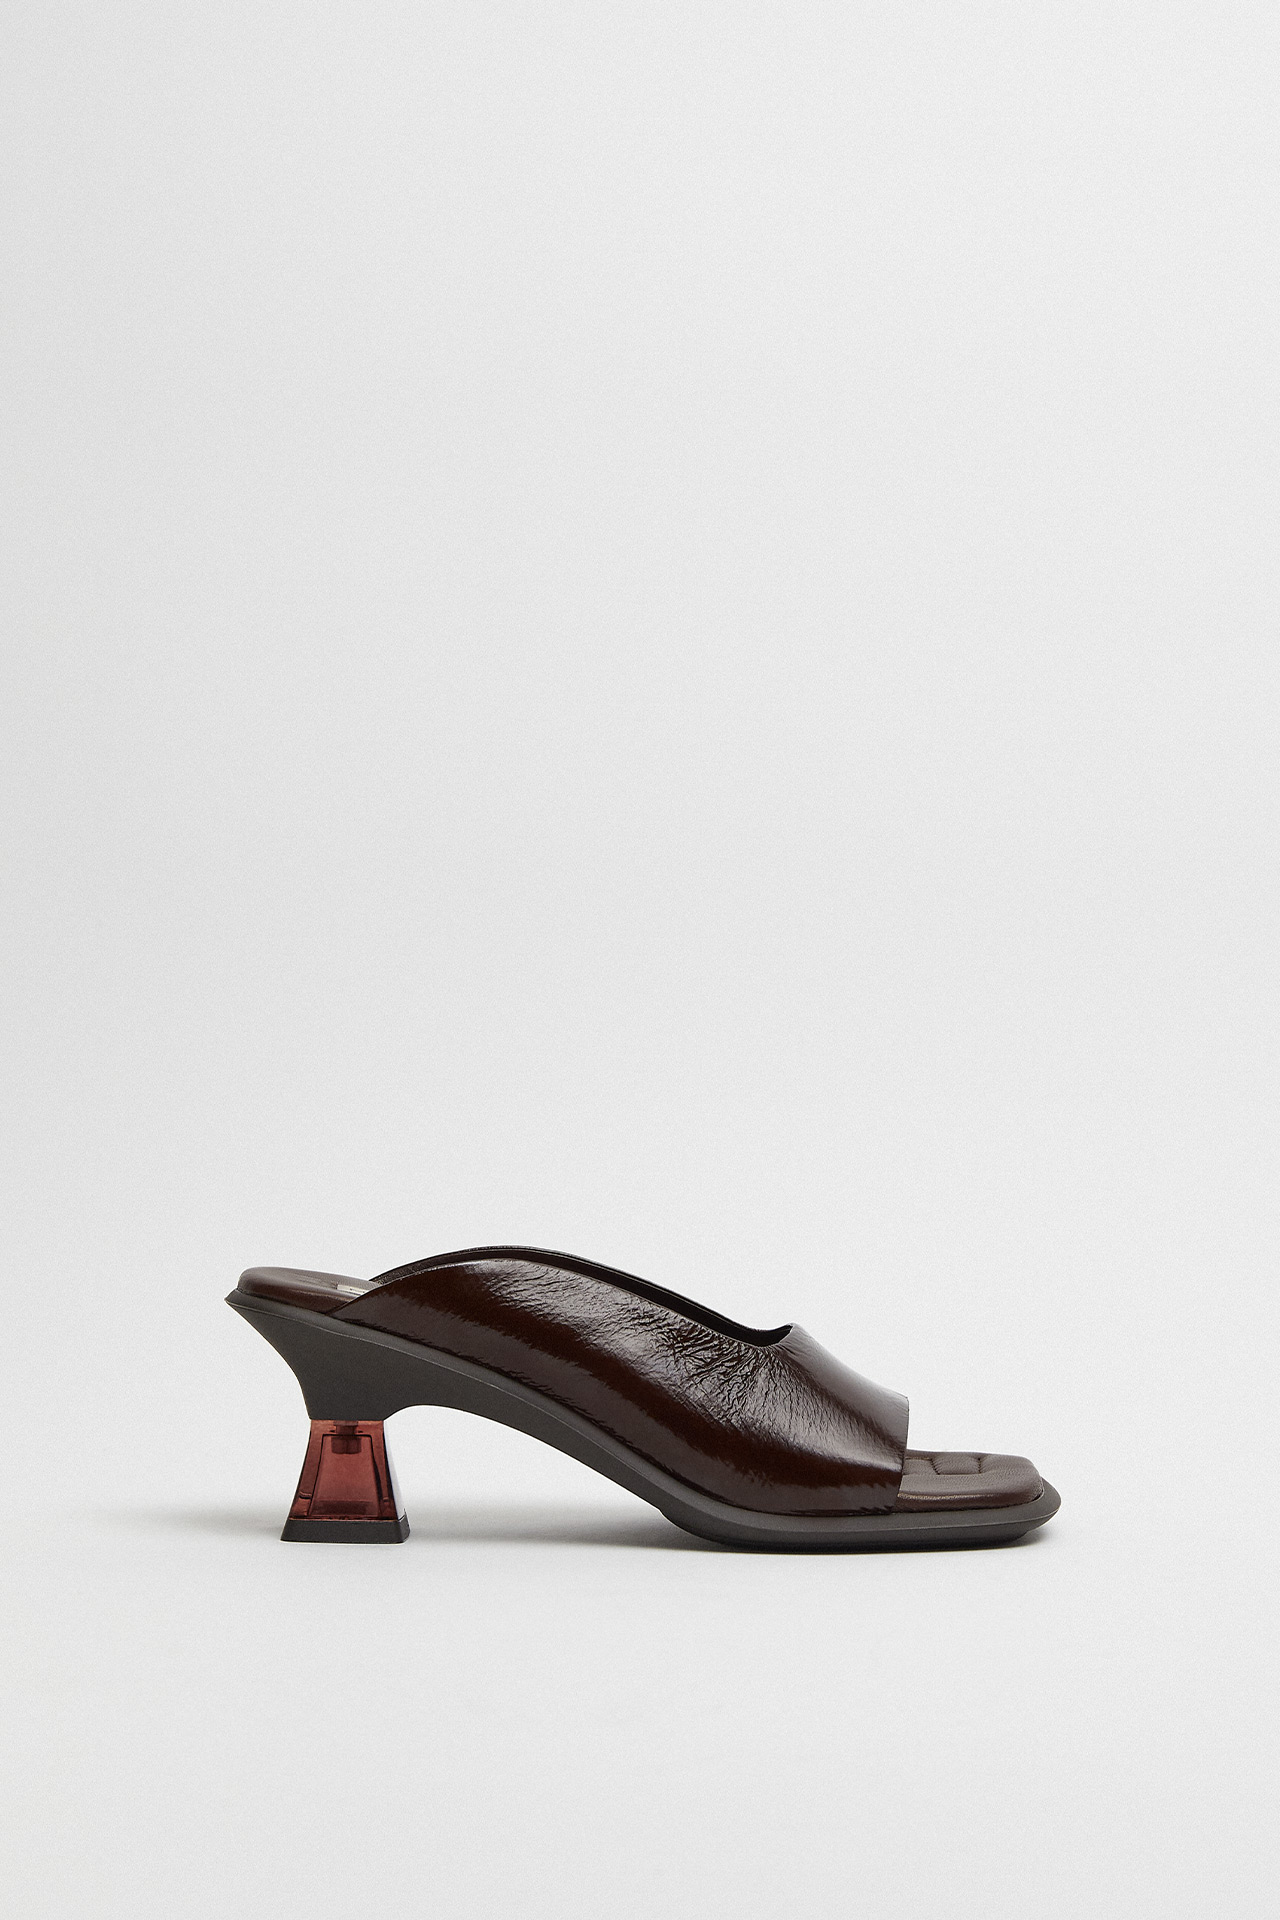 Janaina Dark Brown Mule Sandals | Miista Europe | Made in Portugal